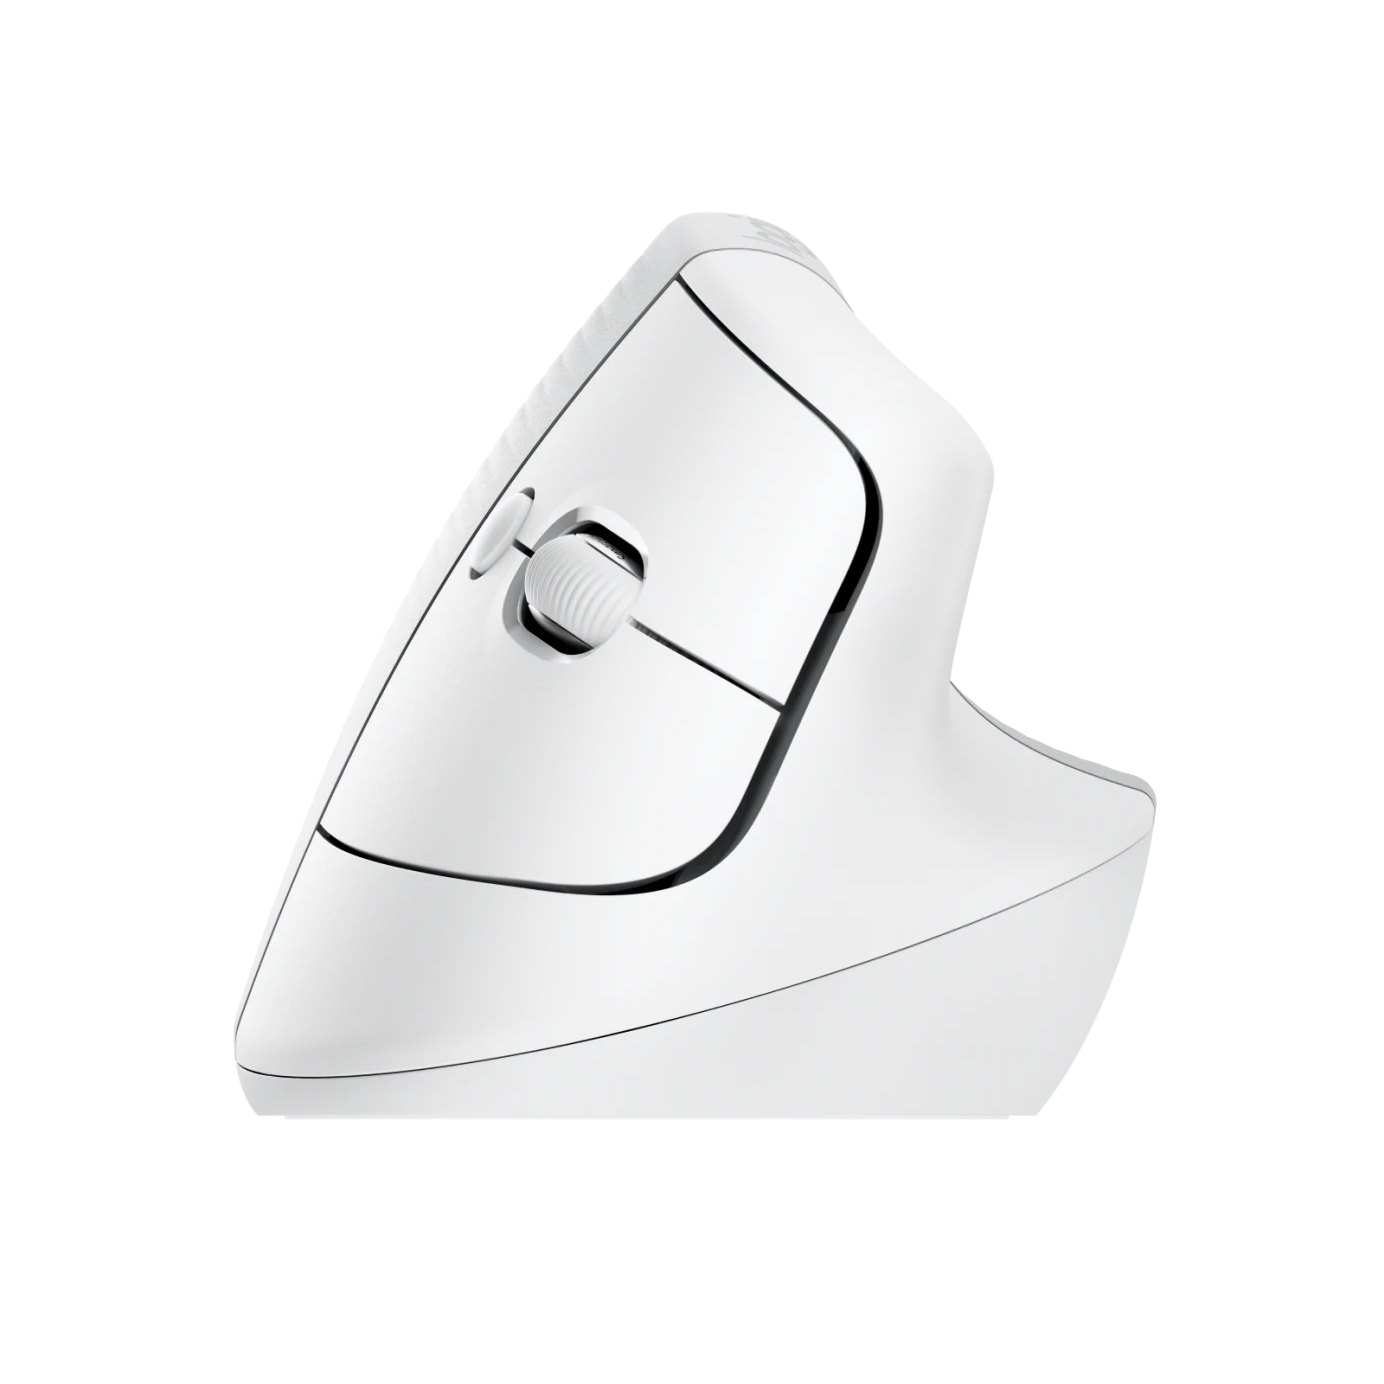 Logitech Lift Vertical Ergonomic Mouse for Mac